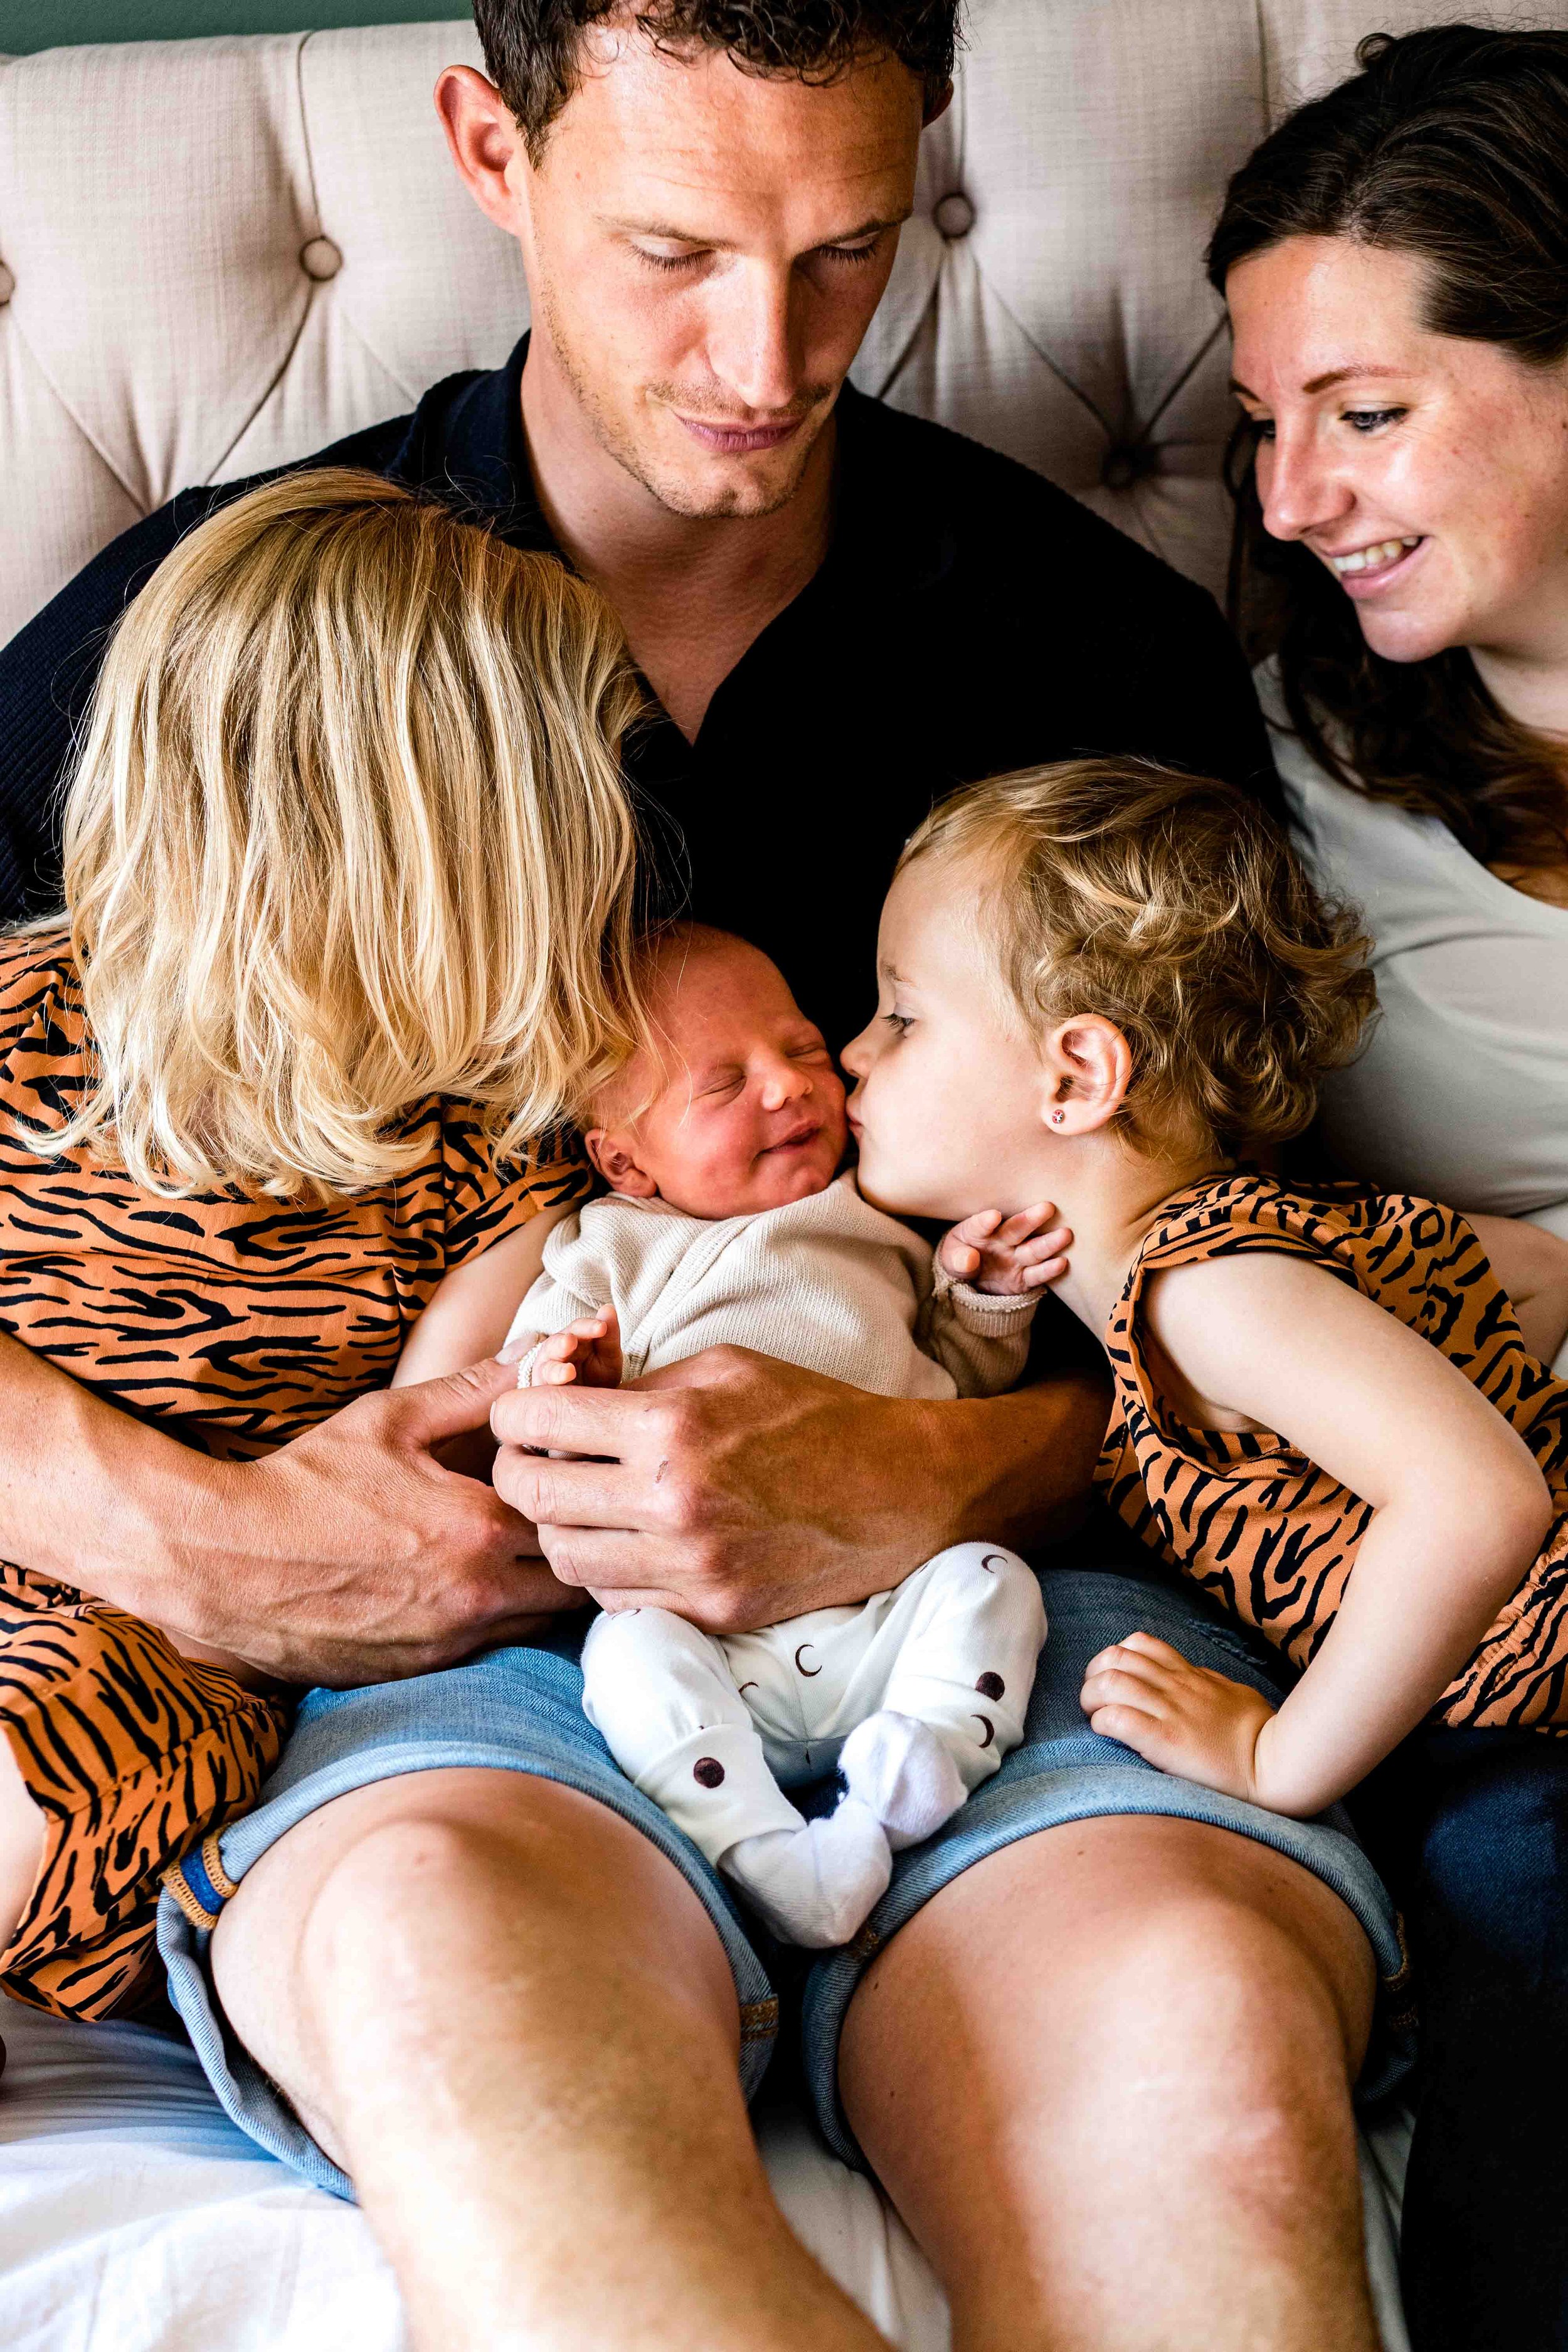 vankellyshand-familie-newborn-fotograaf-fotoshoot-9254.jpg